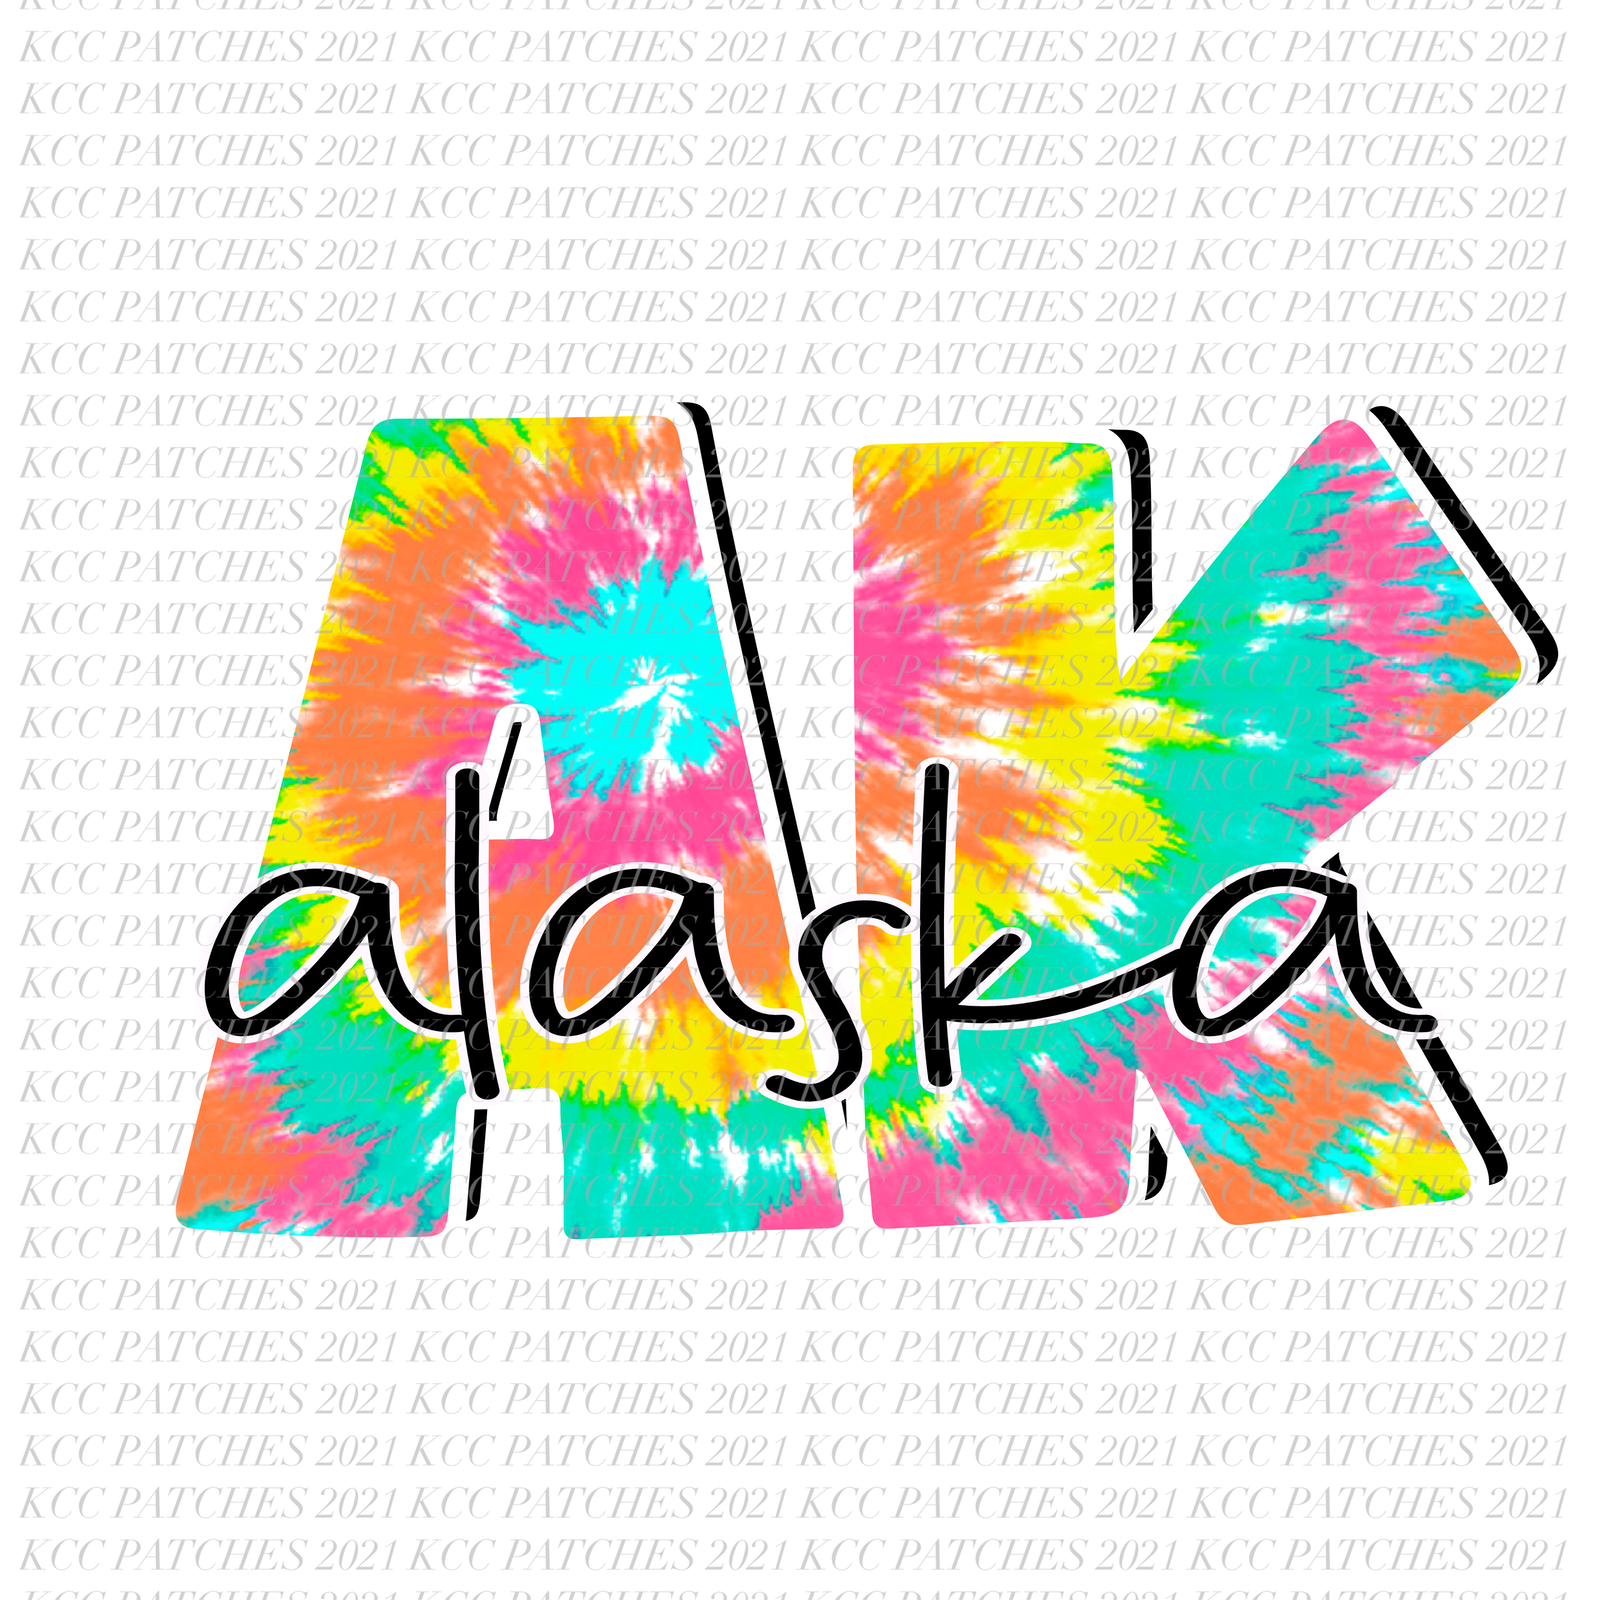 Alaska Tye-dye